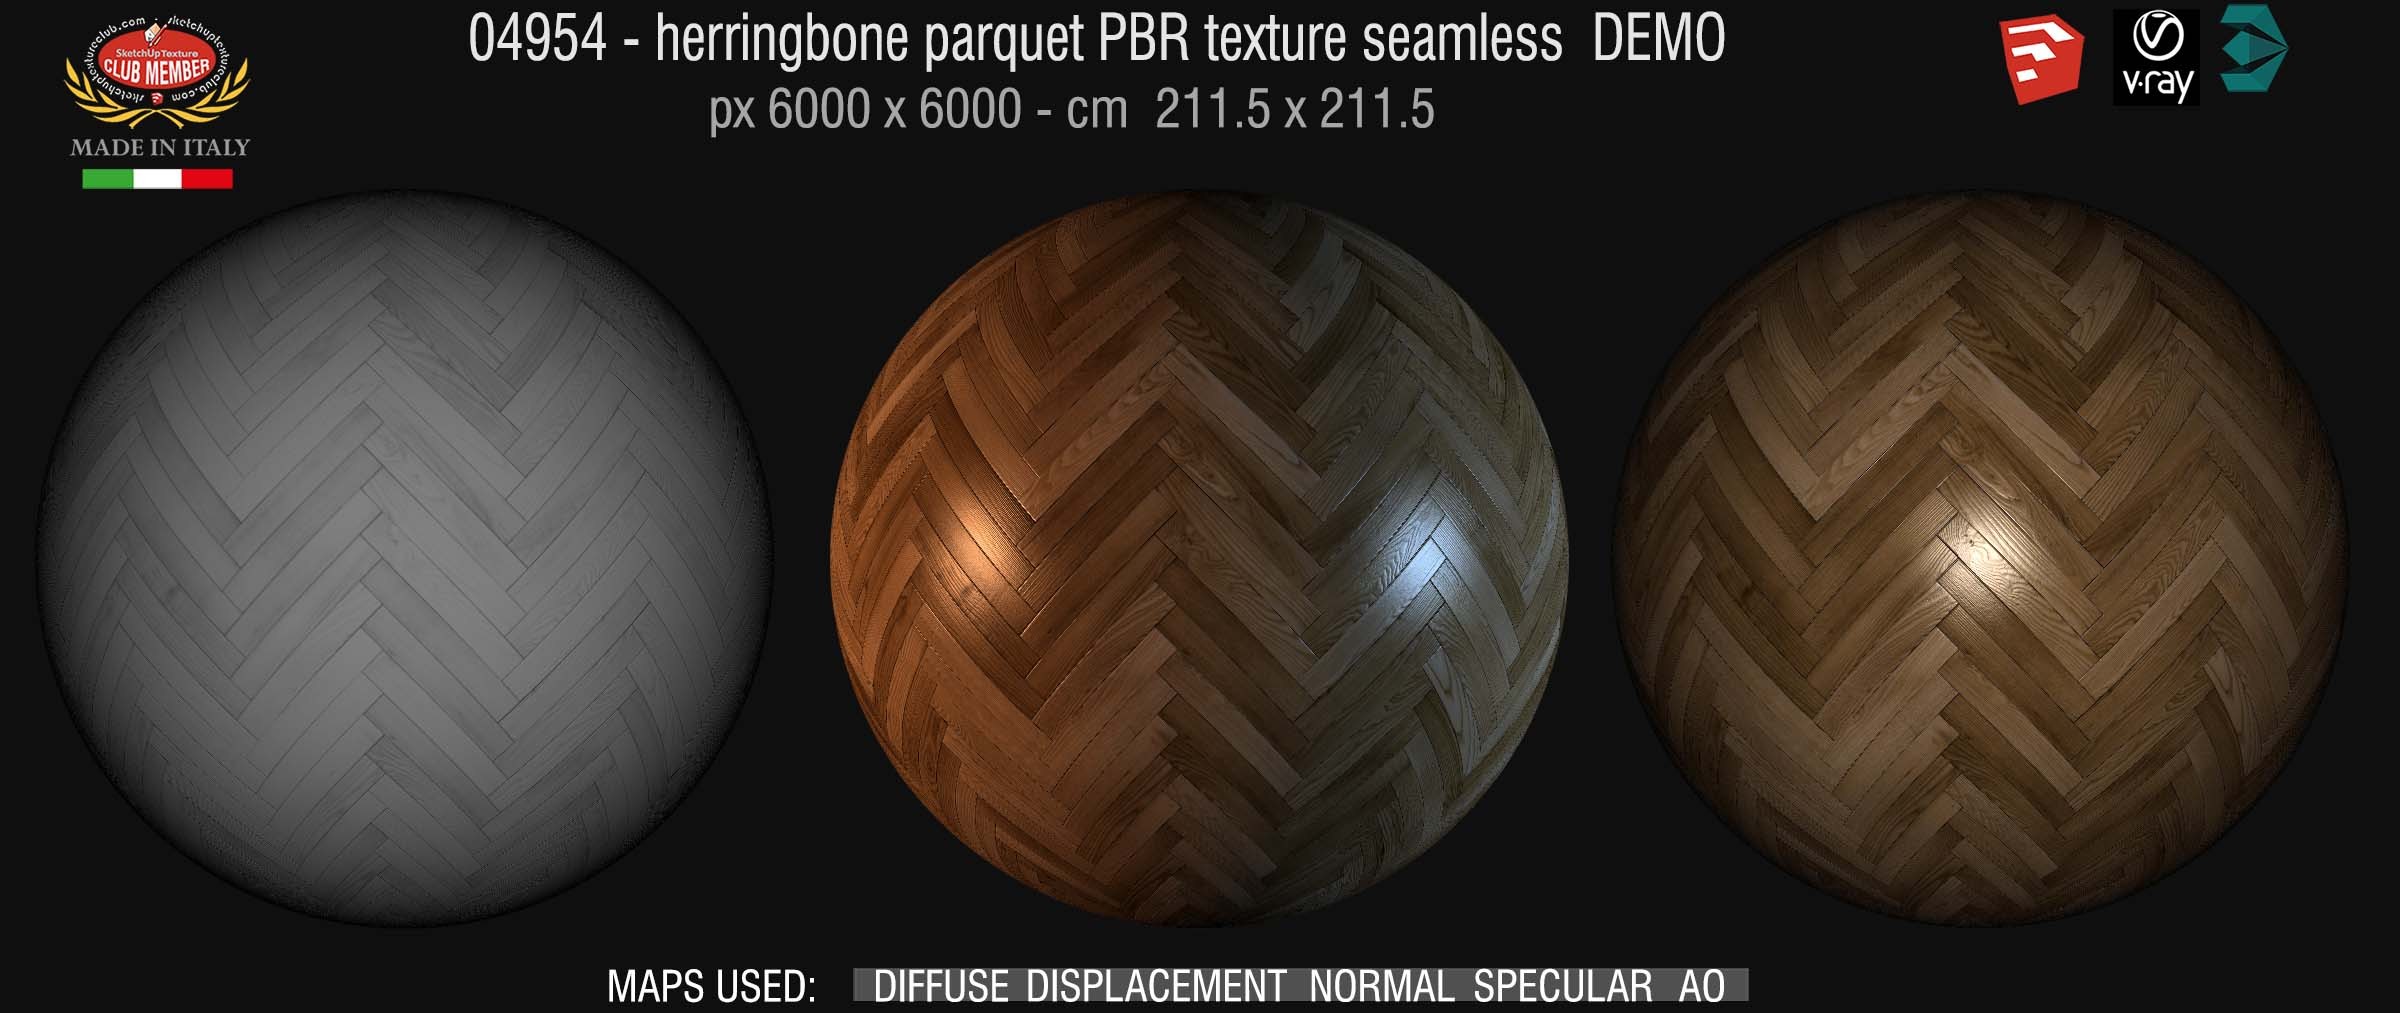 04954 Herringbone parquet PBR texture seamless DEMO